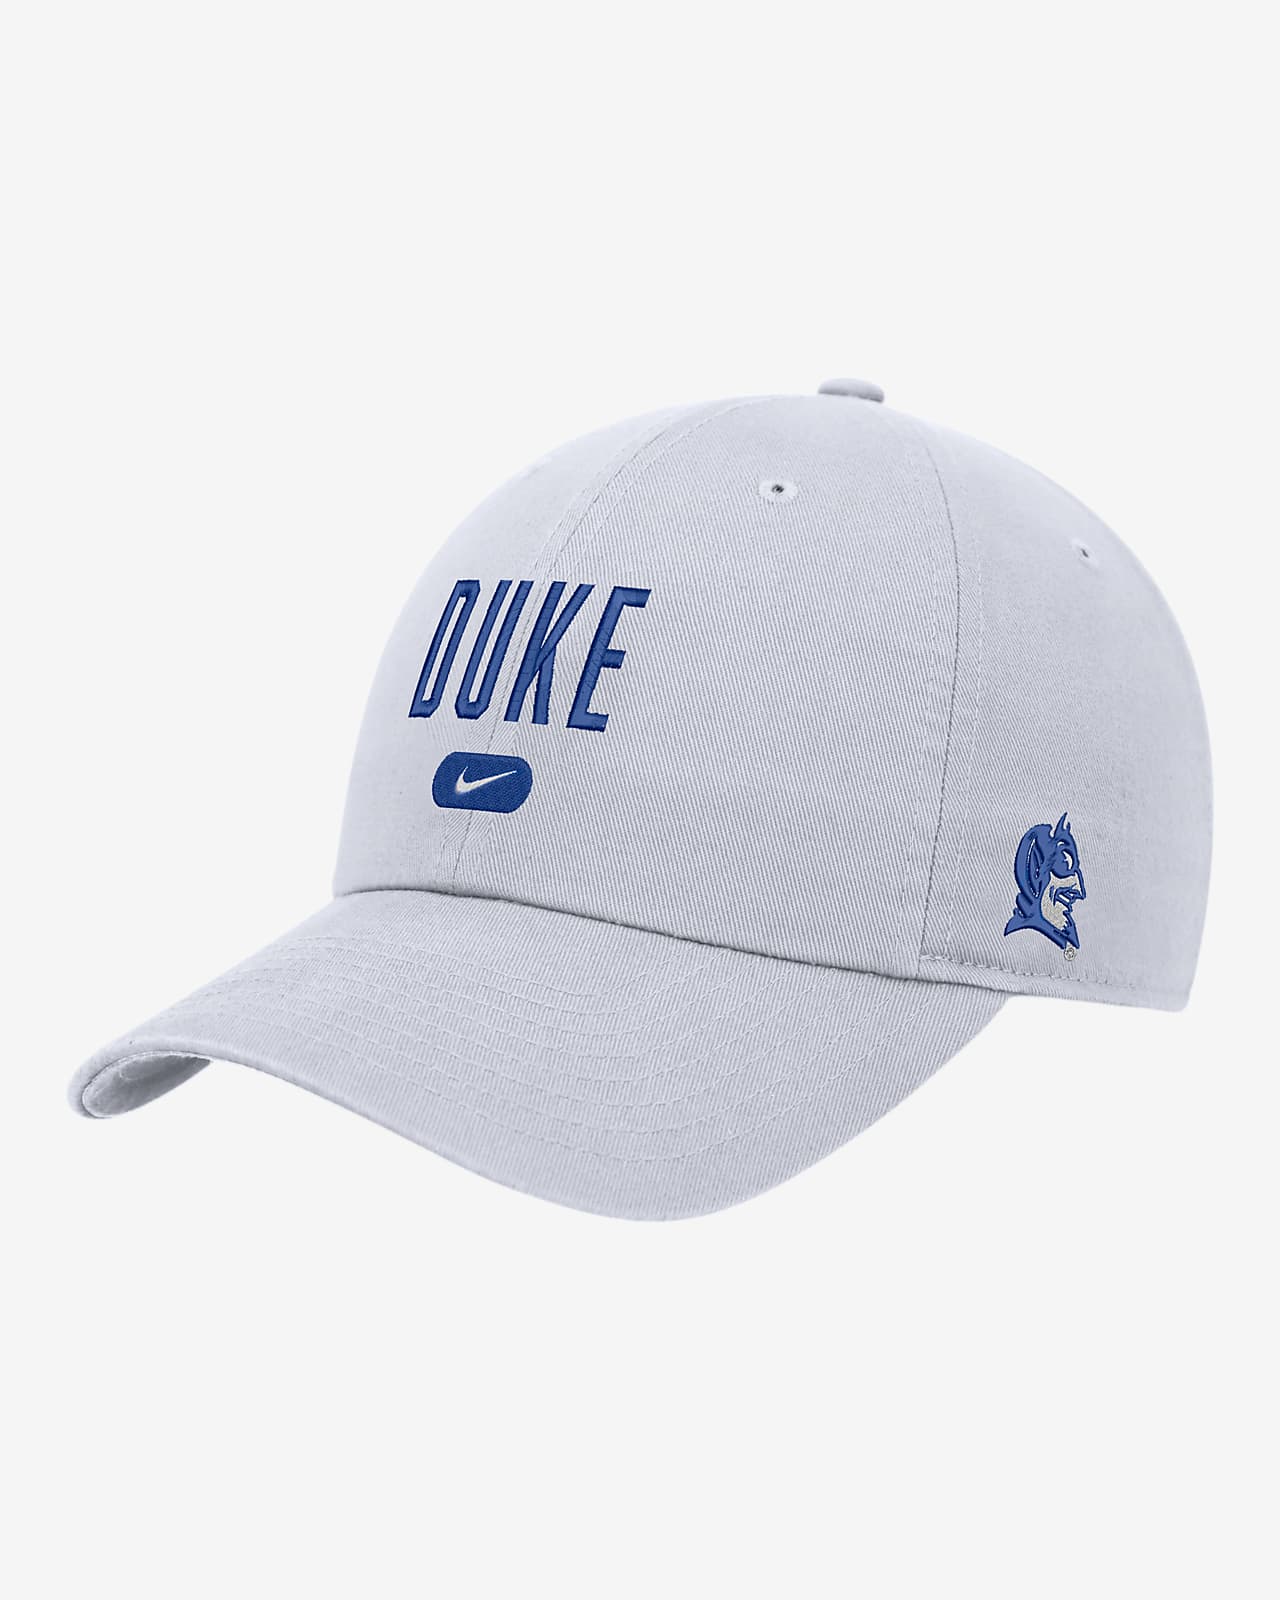 Duke Nike College Campus Cap